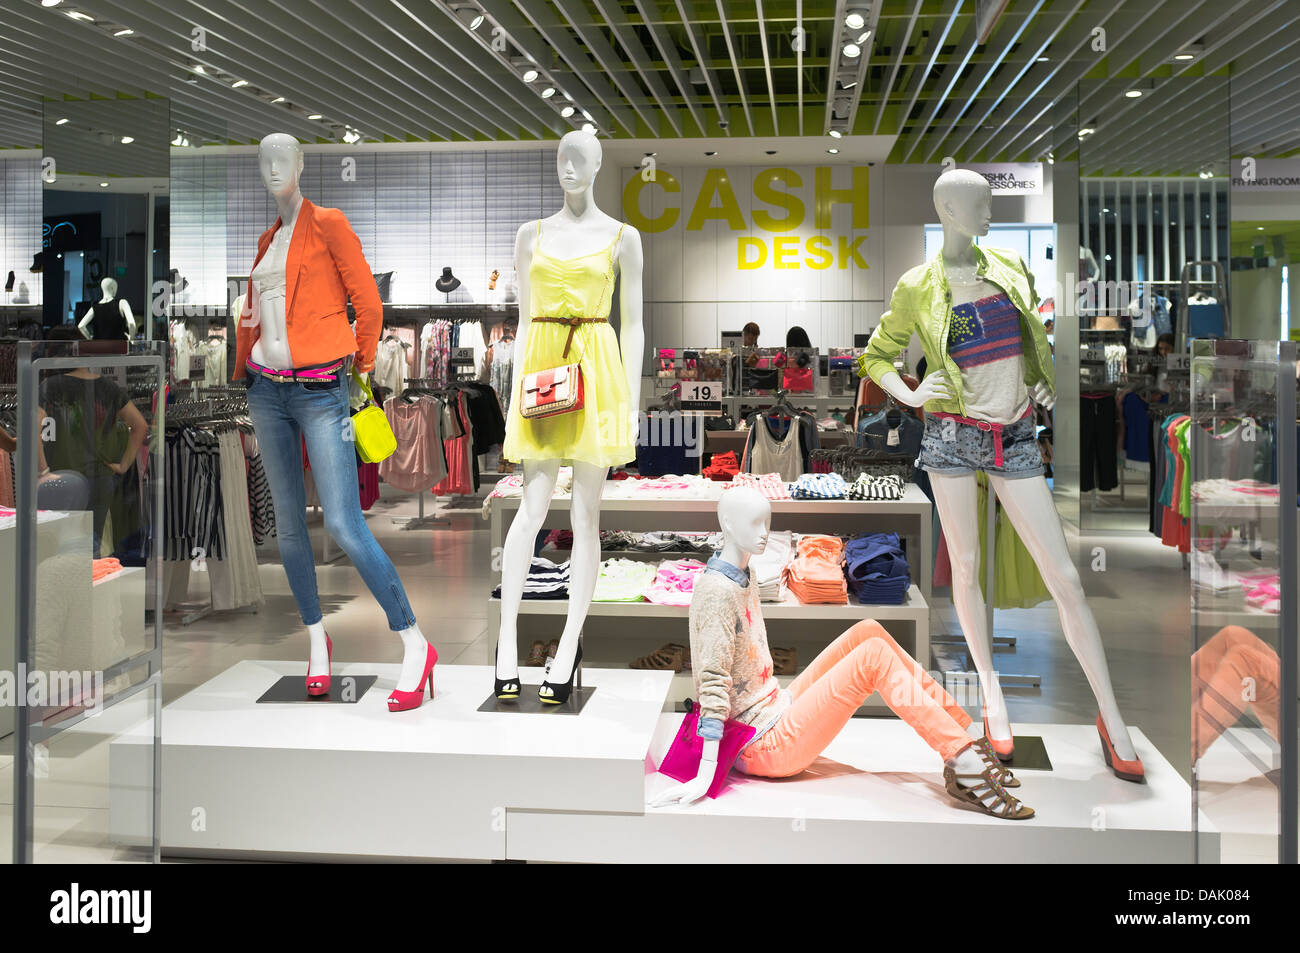 Dh BUGIS PLUS SINGAPUR Shopping Mall de moda ropa bershka escaparate Foto de stock